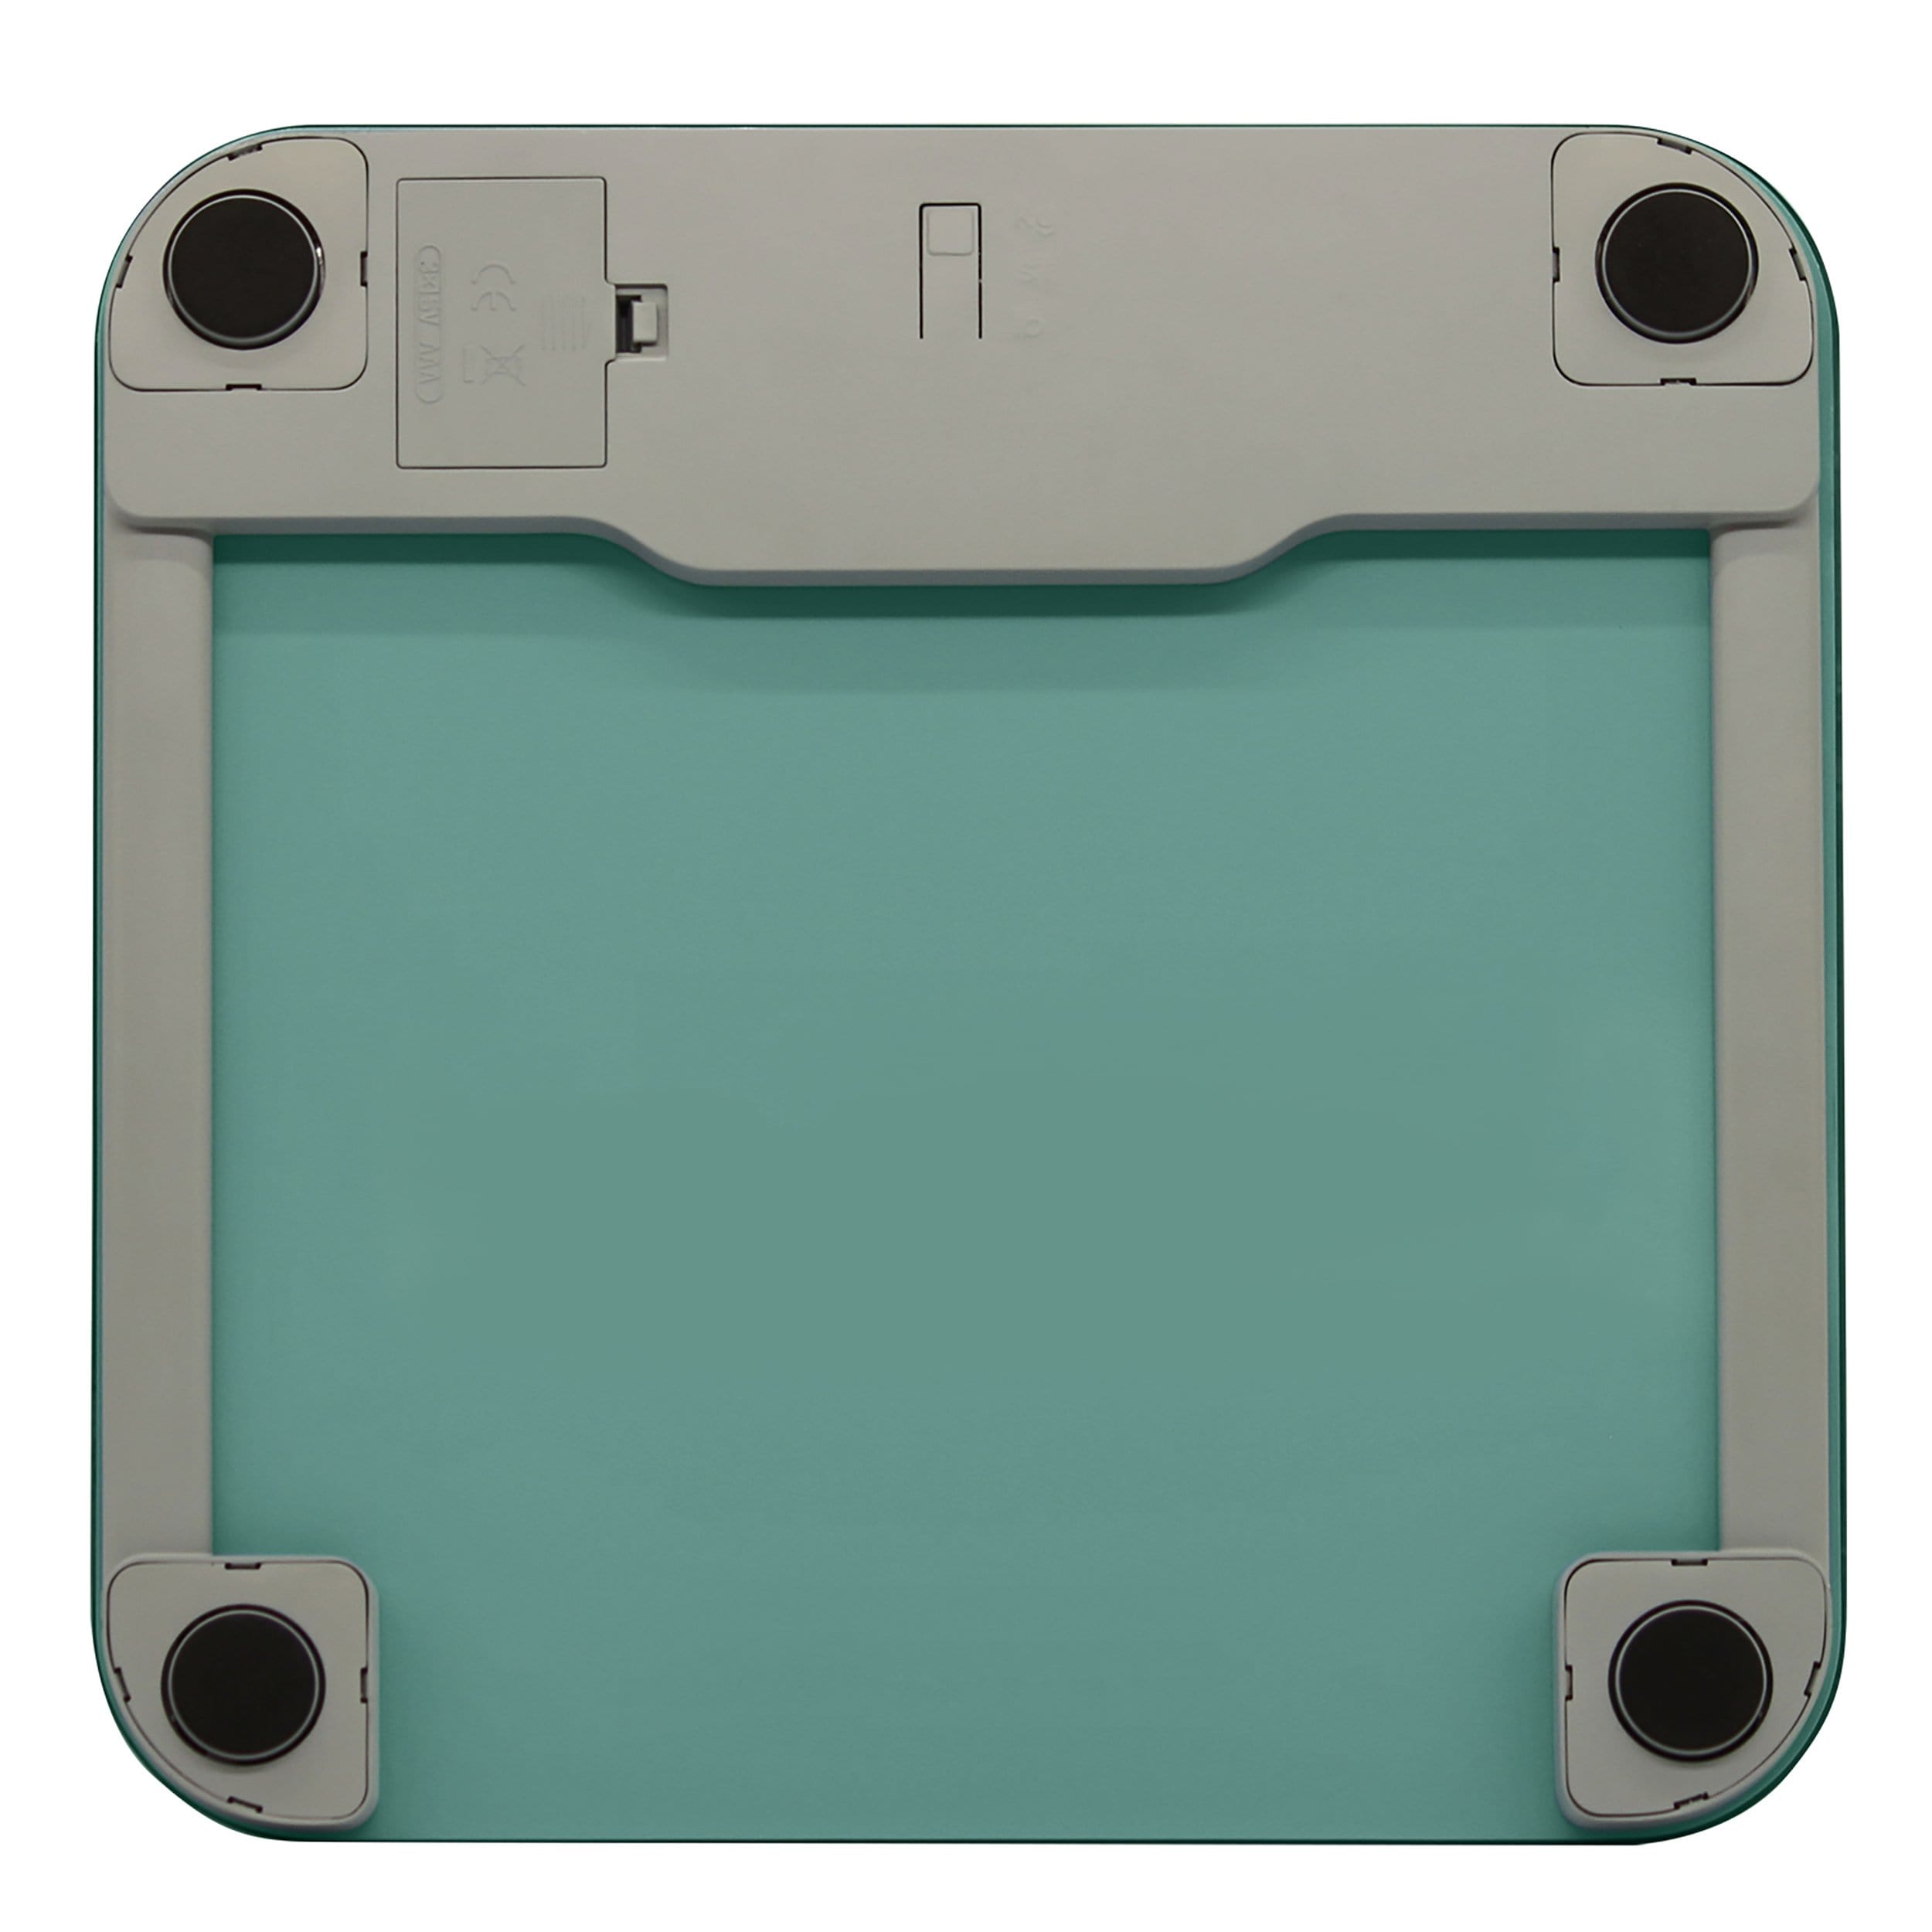 Taylor Precision Products Digital Bathroom Scale, 500 Pound Capacity, Sea Foam Green